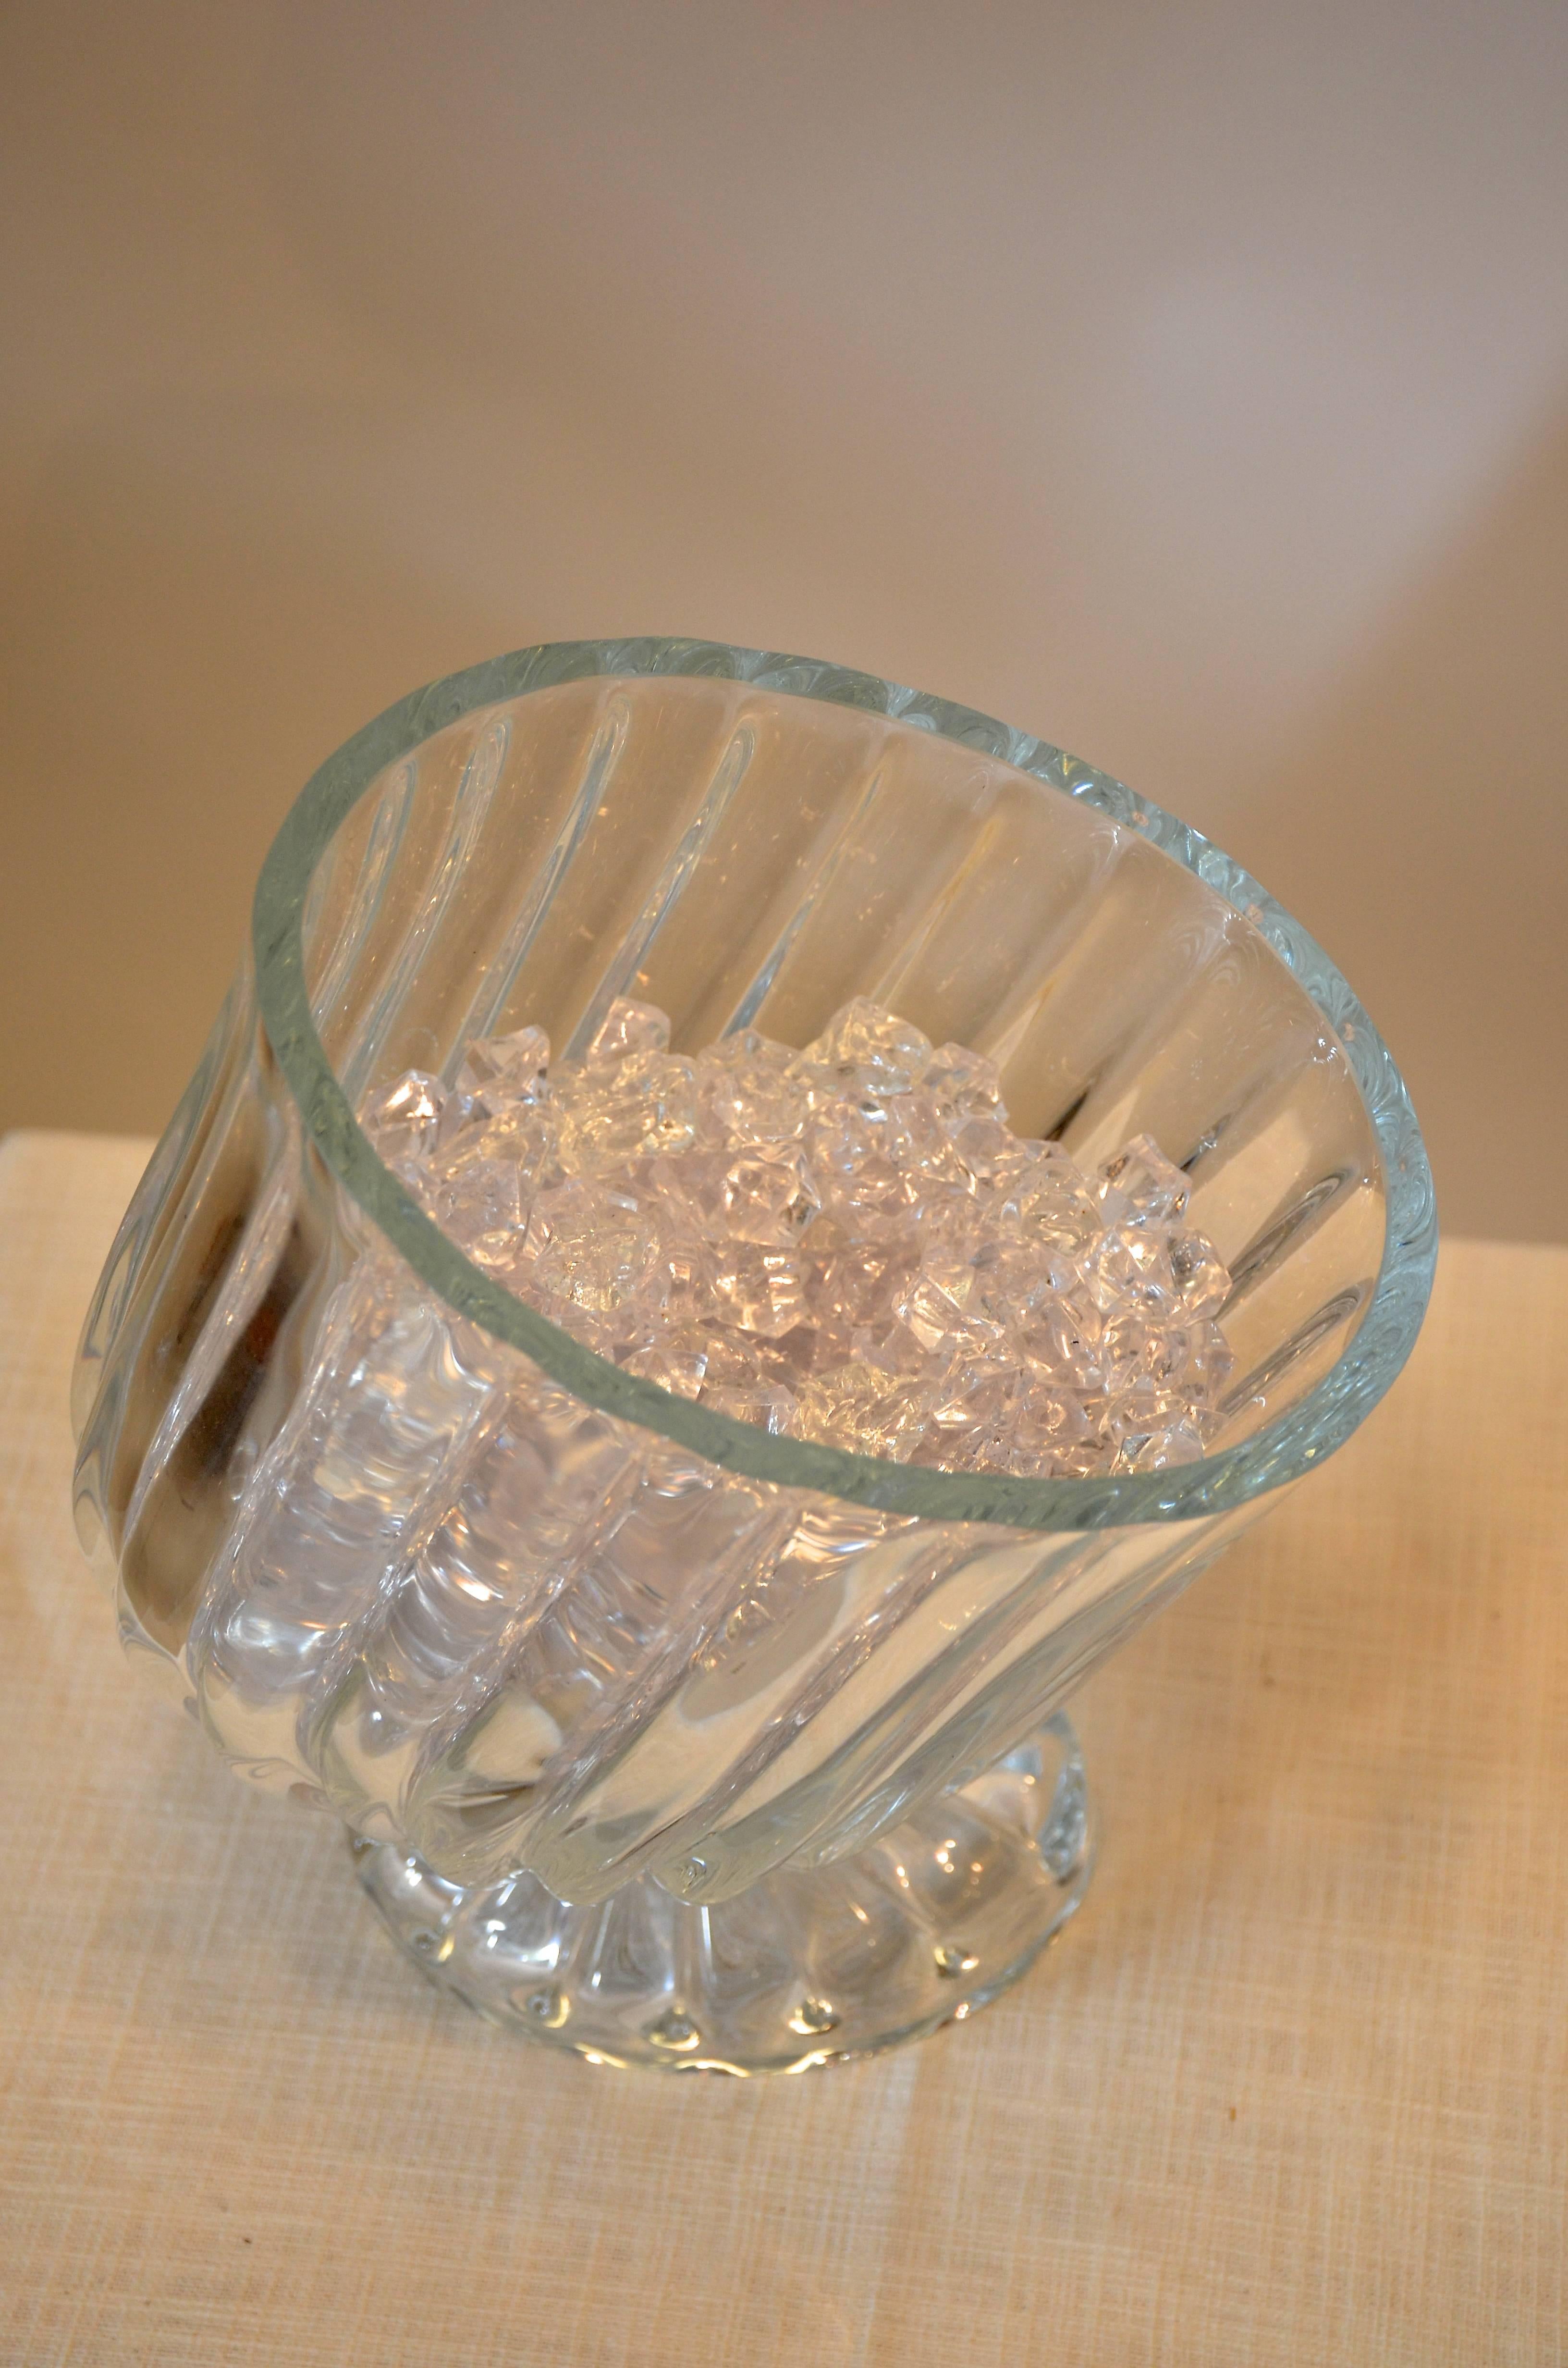 Optic crystal wine chiller fantastic piece, beautiful countertop accessory.